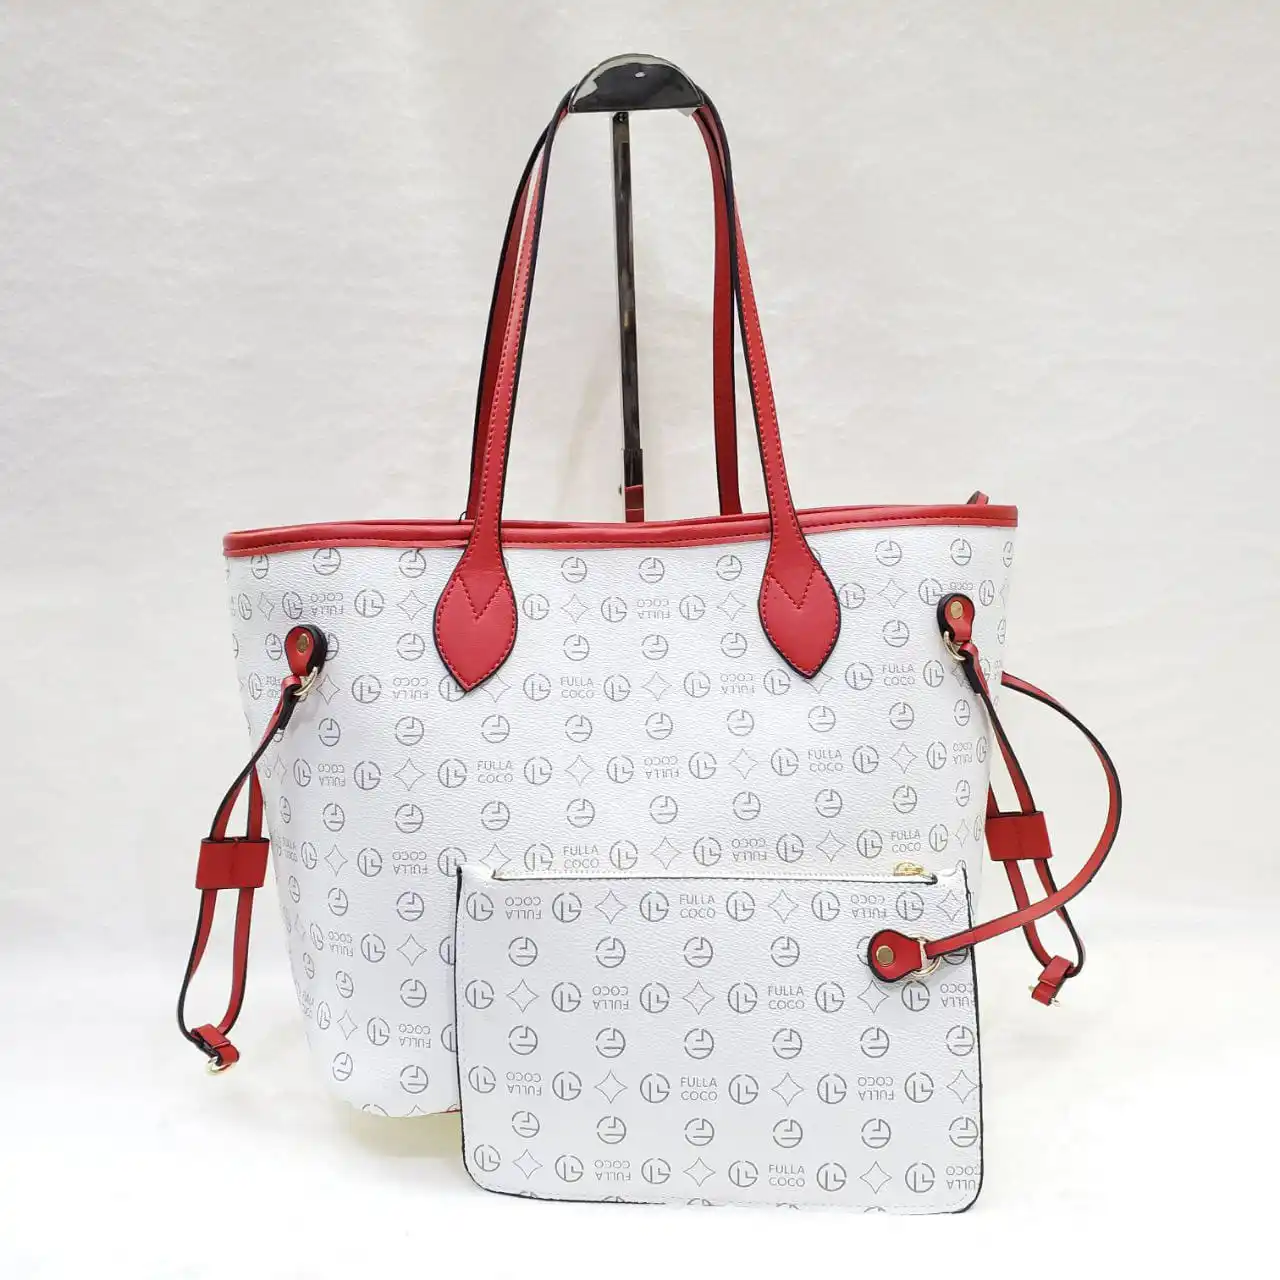 Bayan tasrımcı tote bag fashion handbag women bags and bolso bag and Bag tote bag hand bag sleeve bag waller